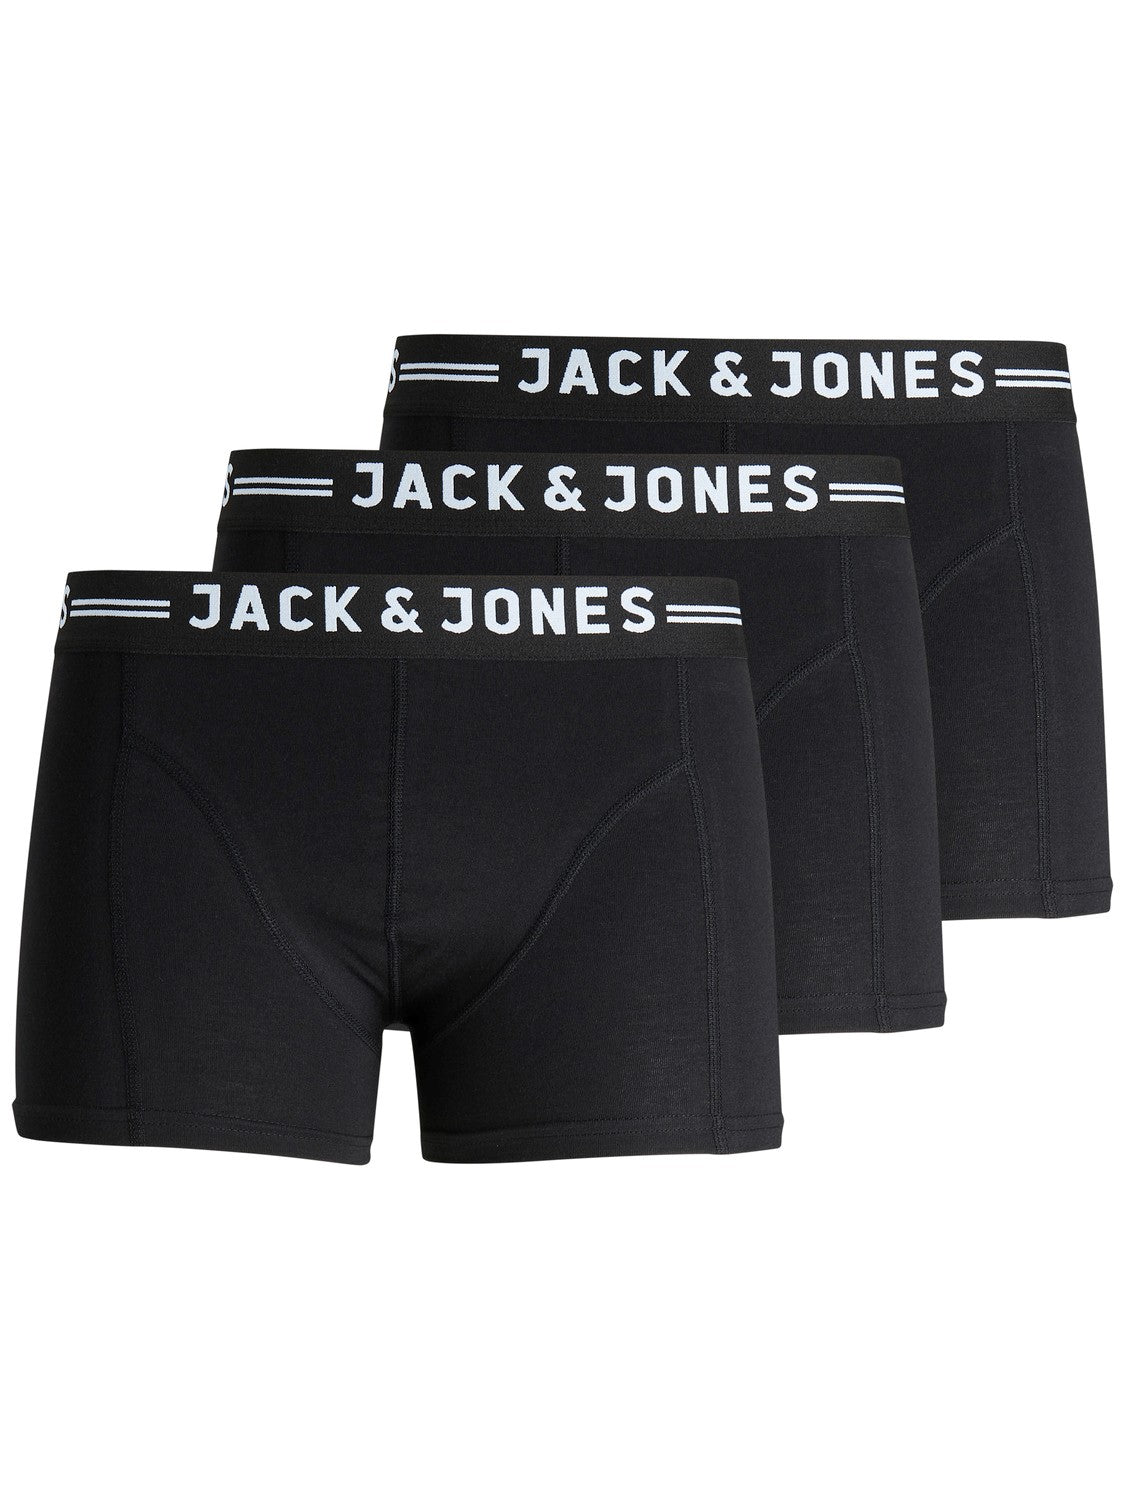 Se Jack & Jones - SENSE TIGHTS SORT hos Shop19